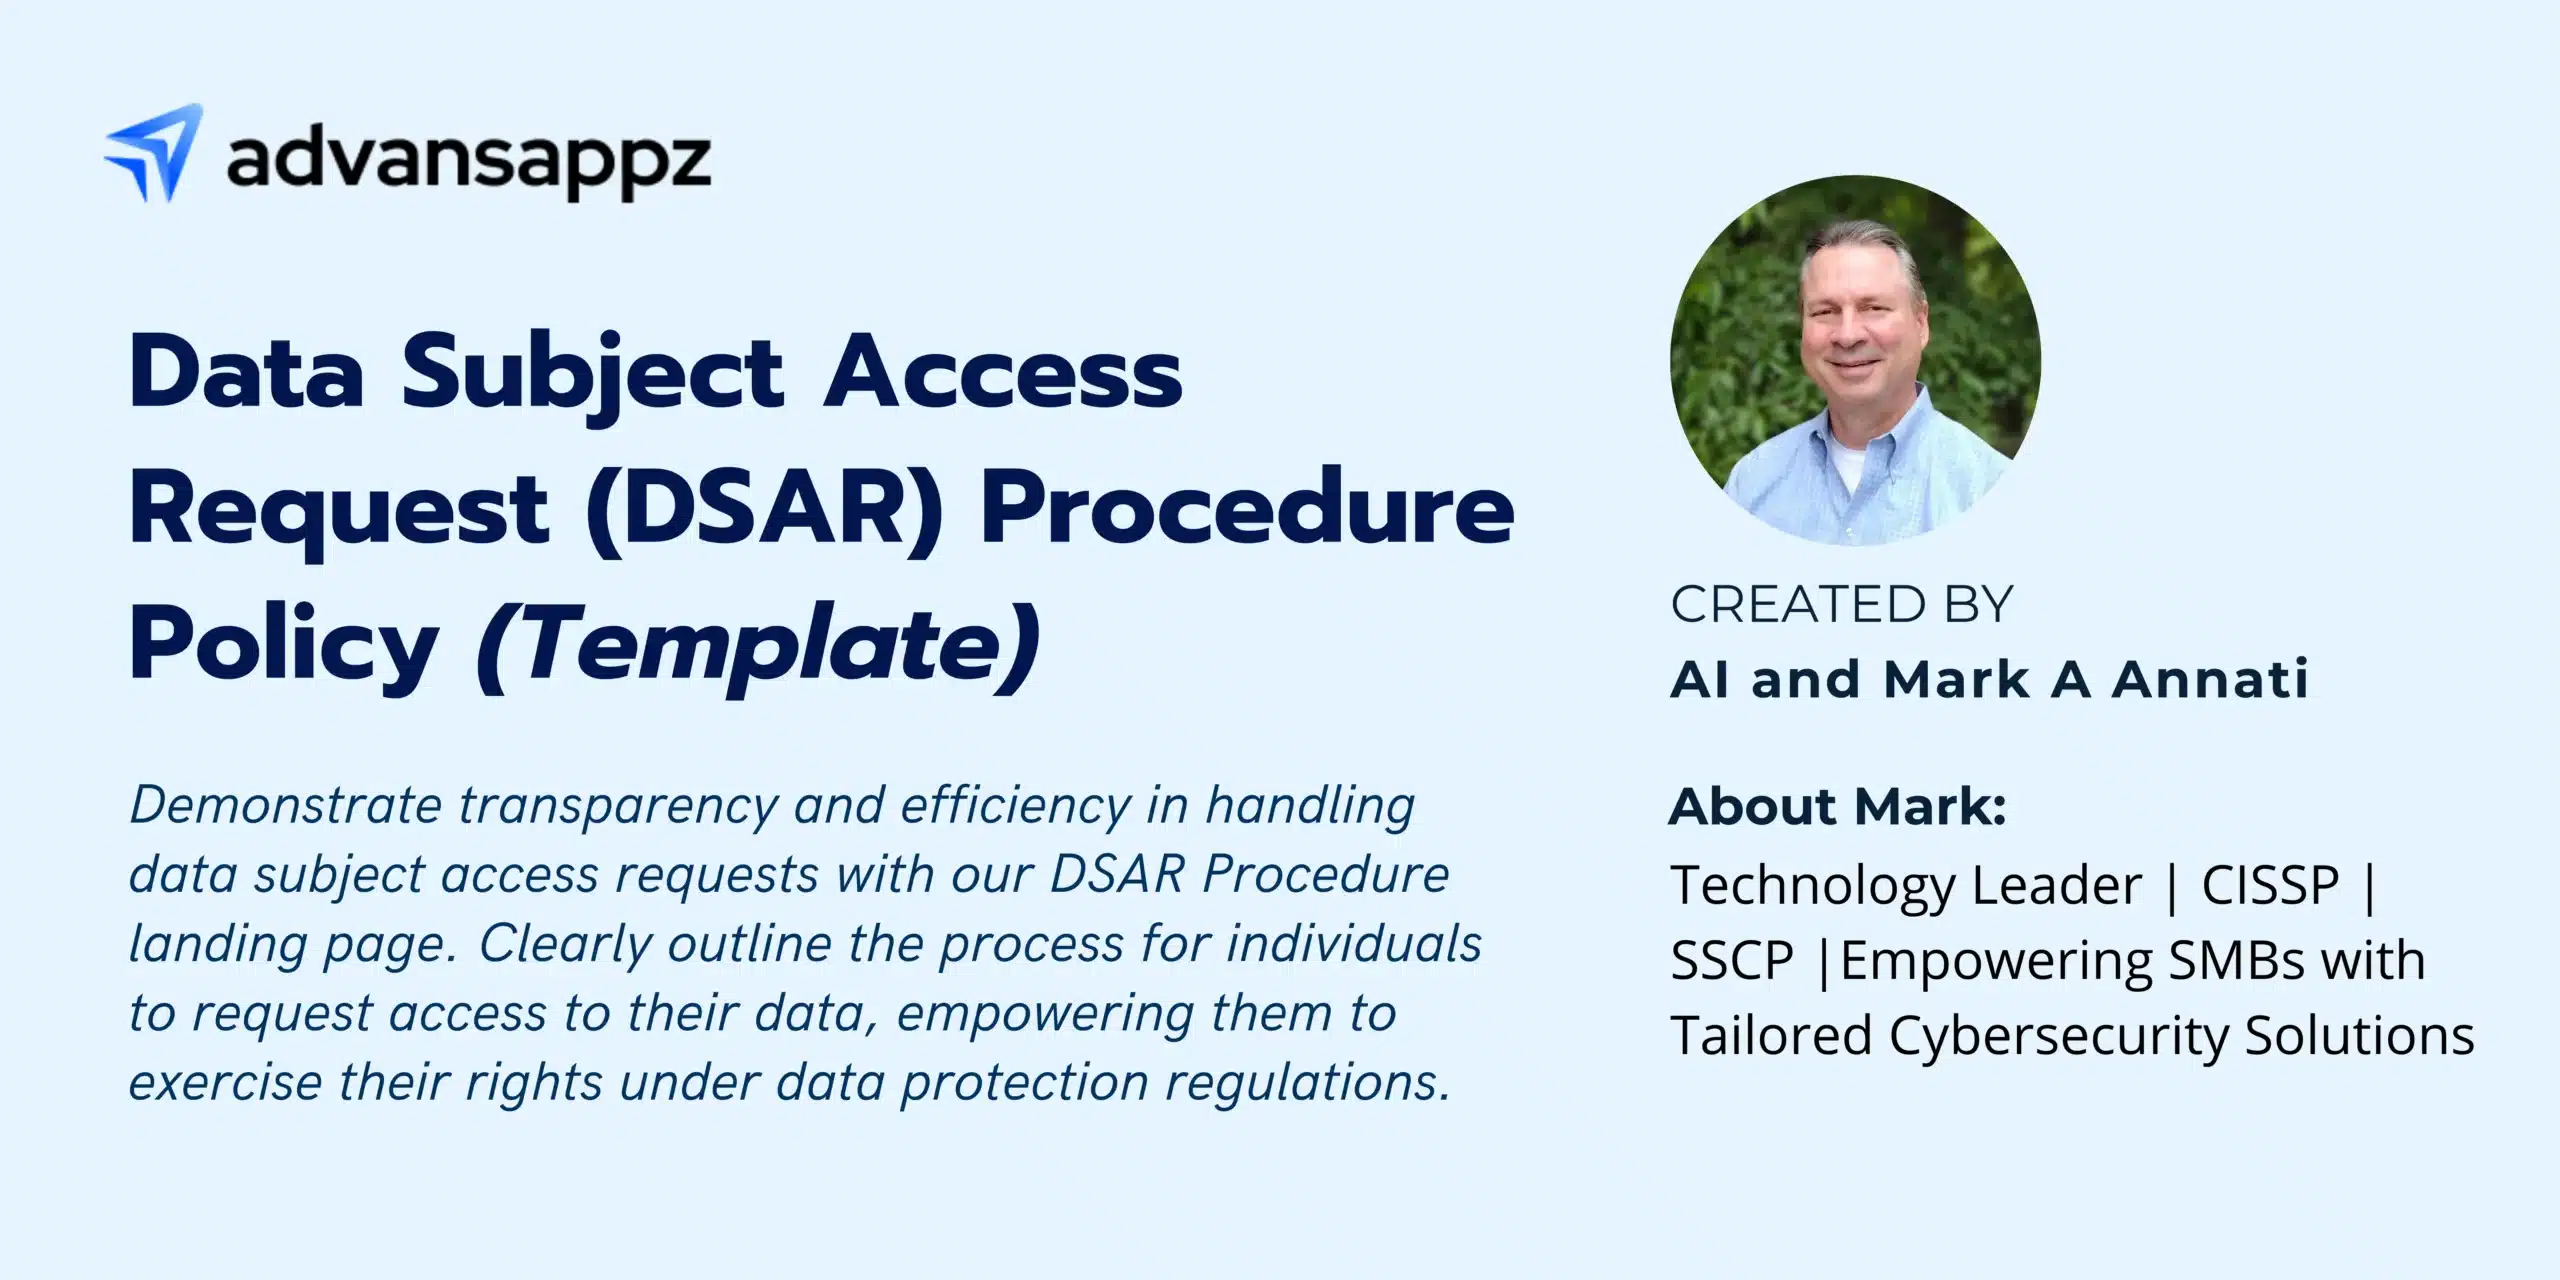 Data Subject Access Request (DSAR) Procedure